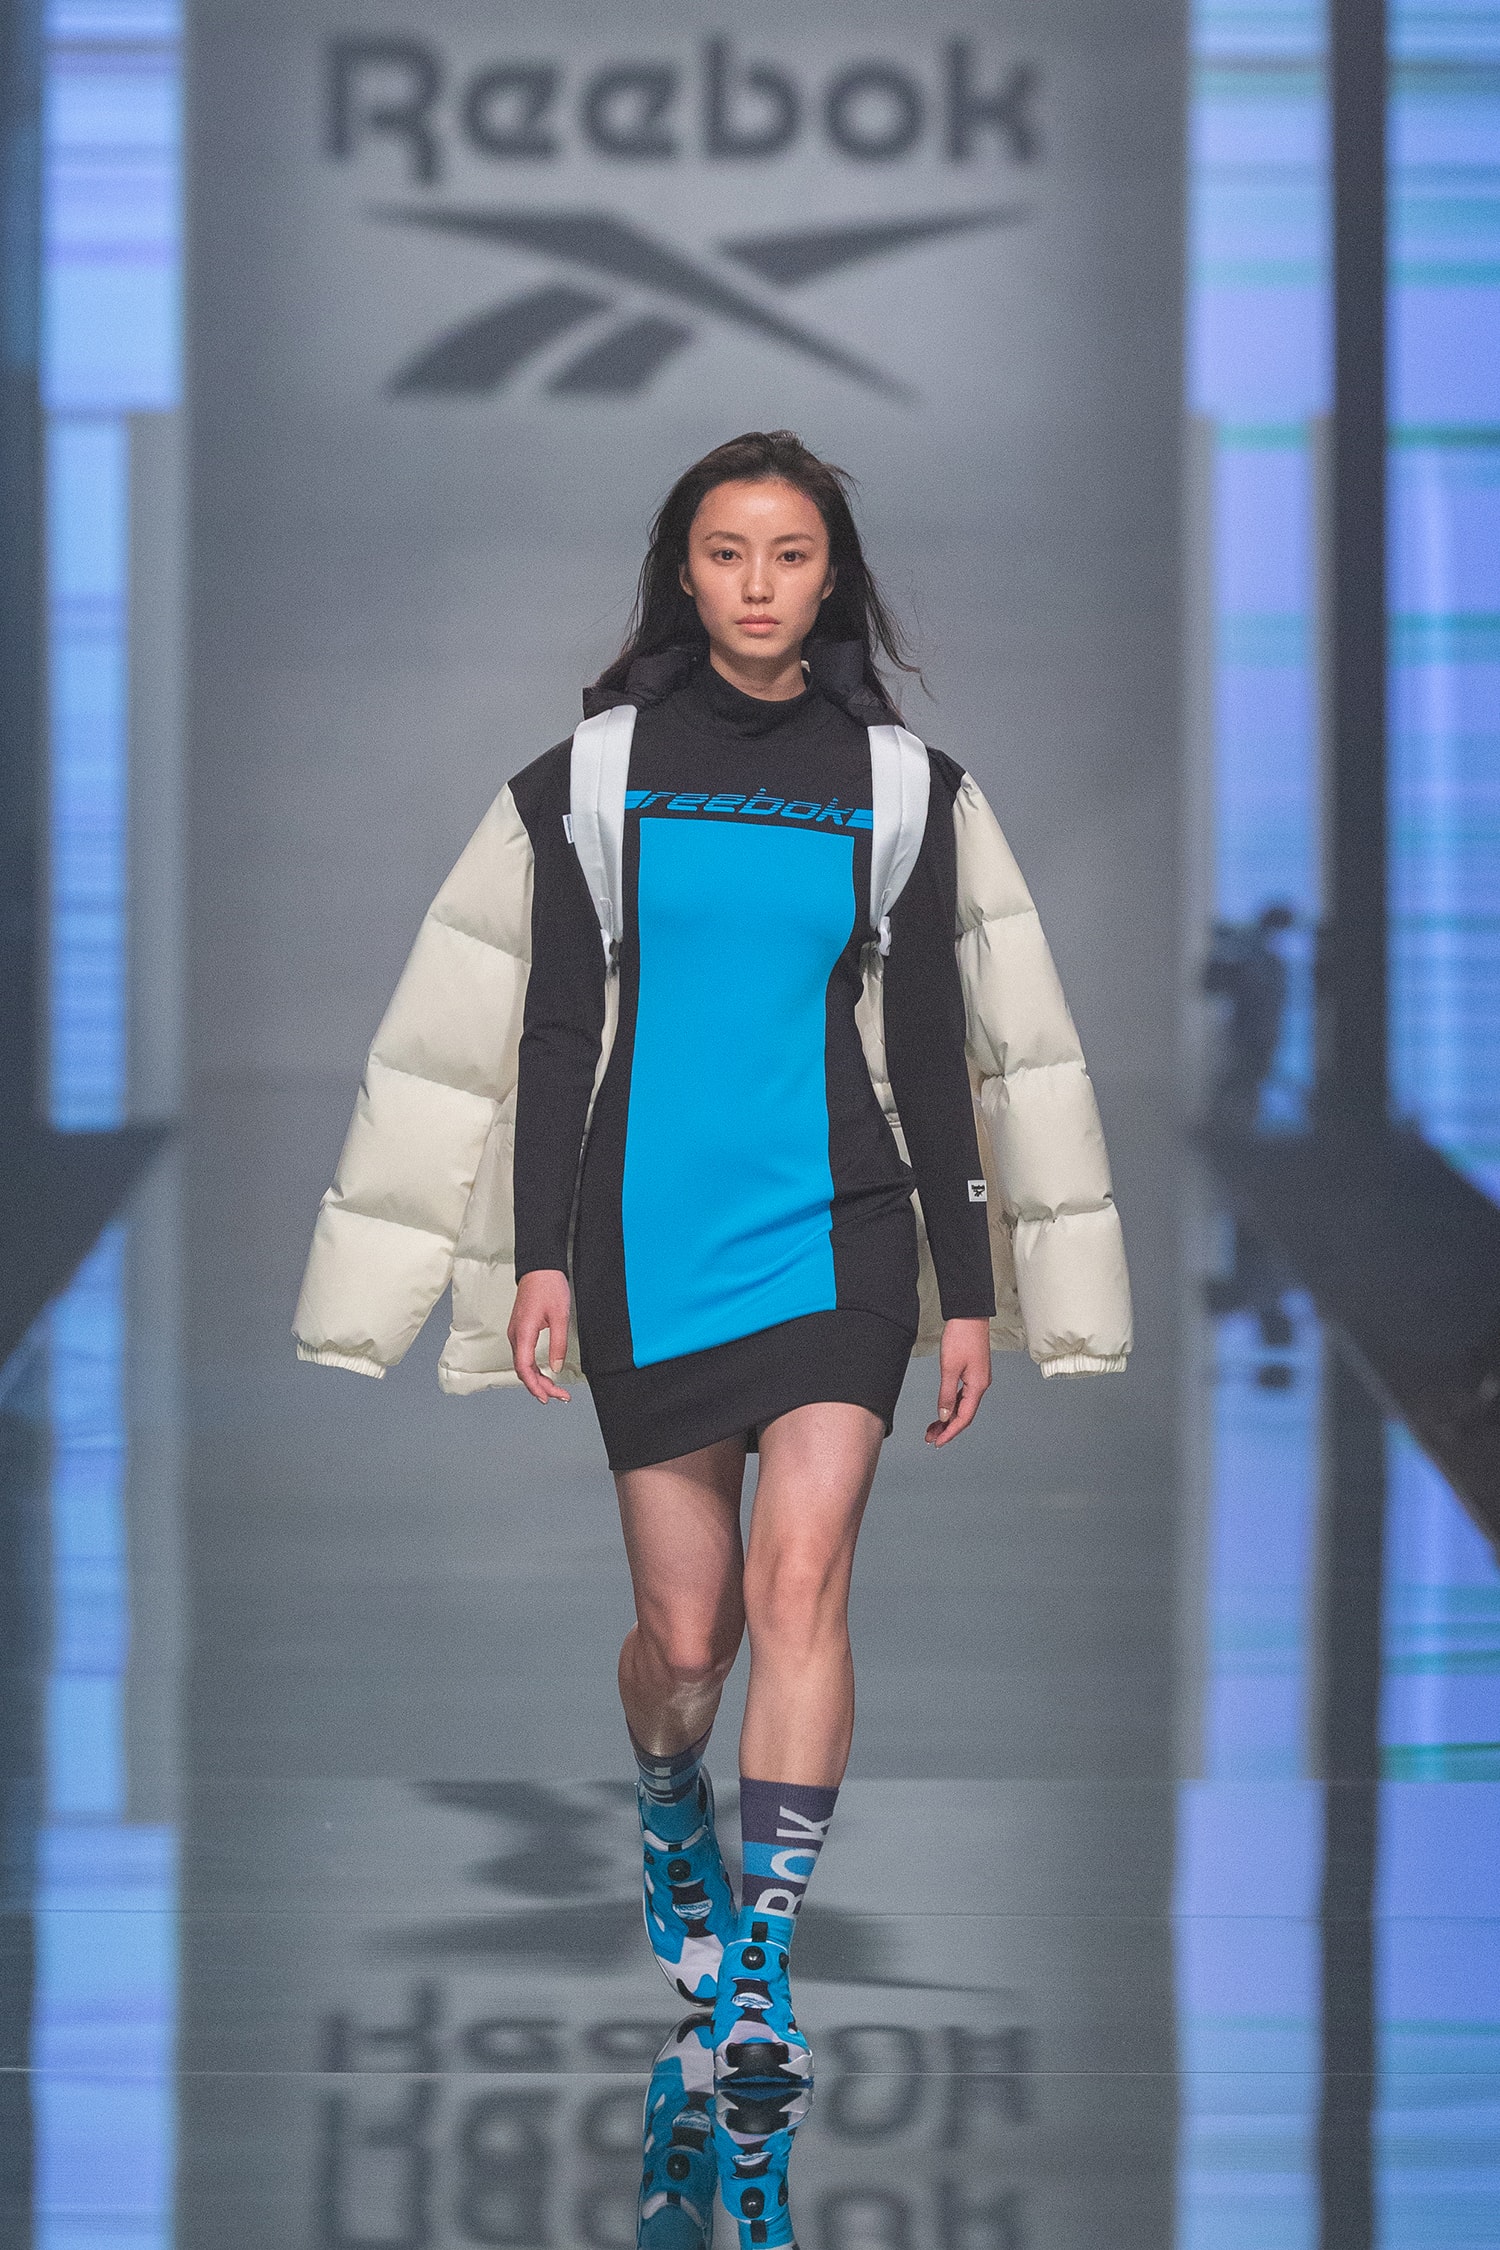 Reebok Fall Winter 2019 Shanghai Fashion Week Show Collection Jacket White Black Dress Teal